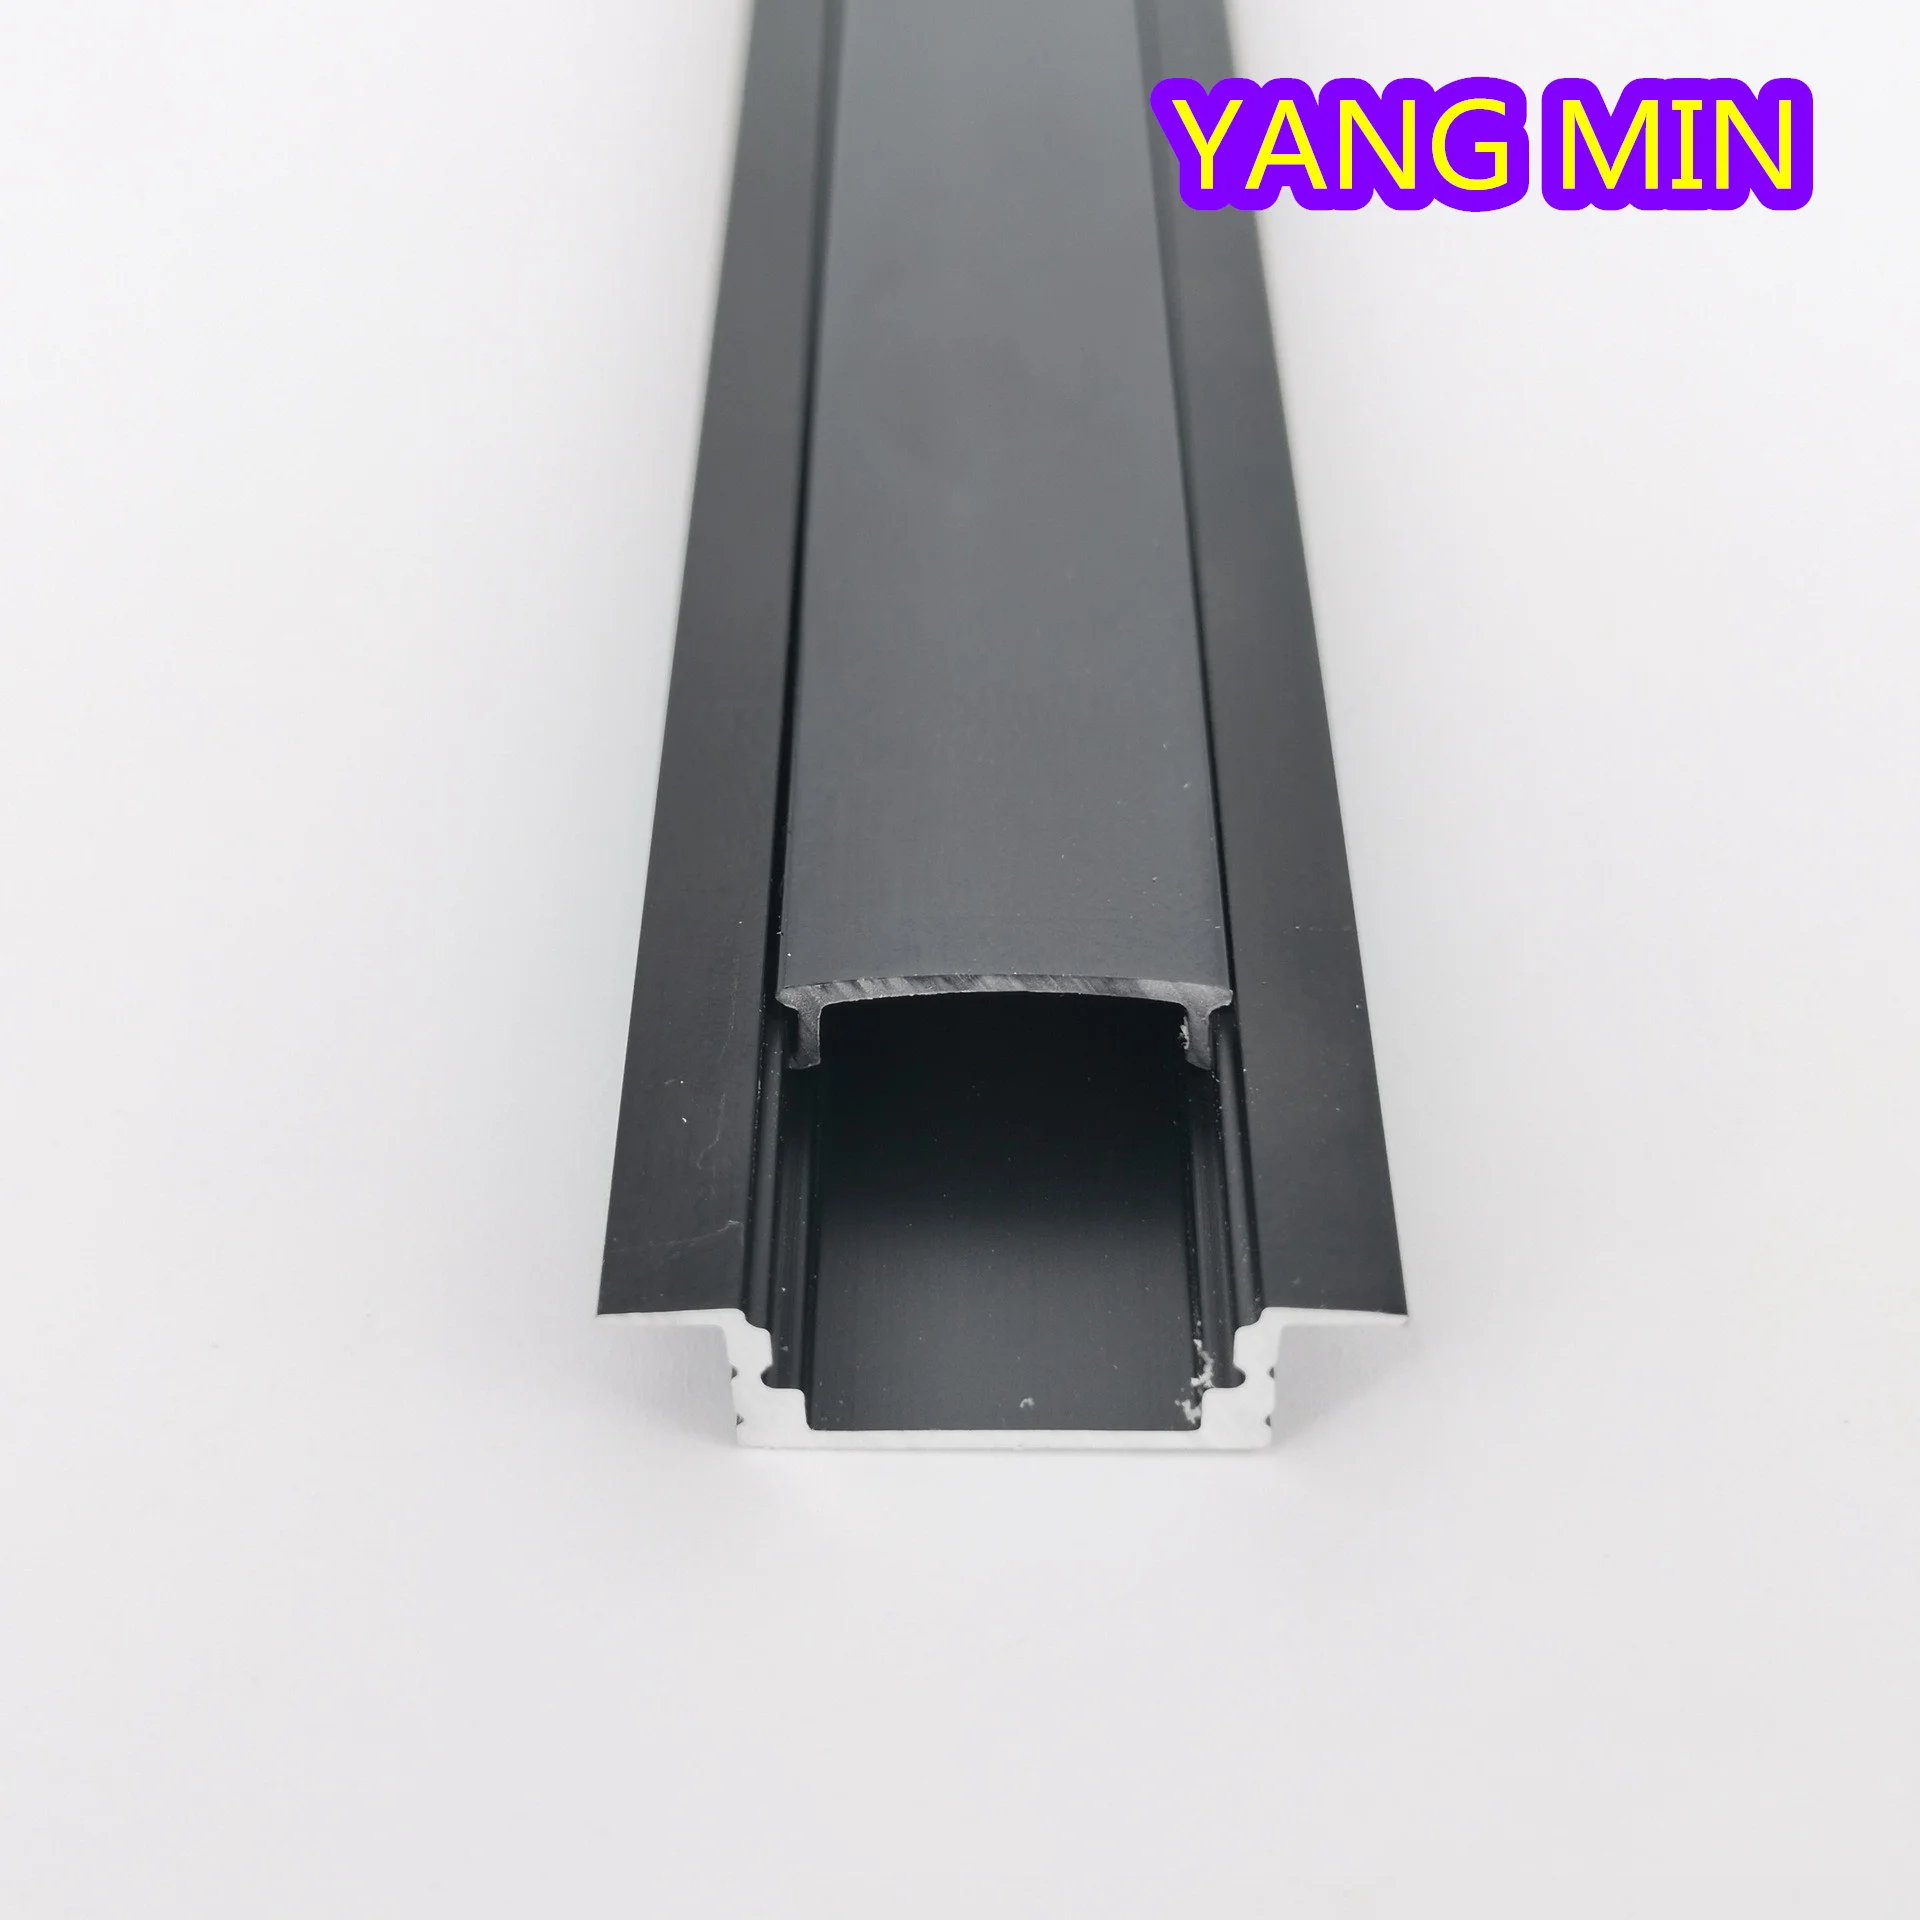 2m/pcs Free Shipping Aluminum Led Profile For Strips 10-12mm PCB Milky/Transparent black PC Cover Ends+Clips - купить по выгодной